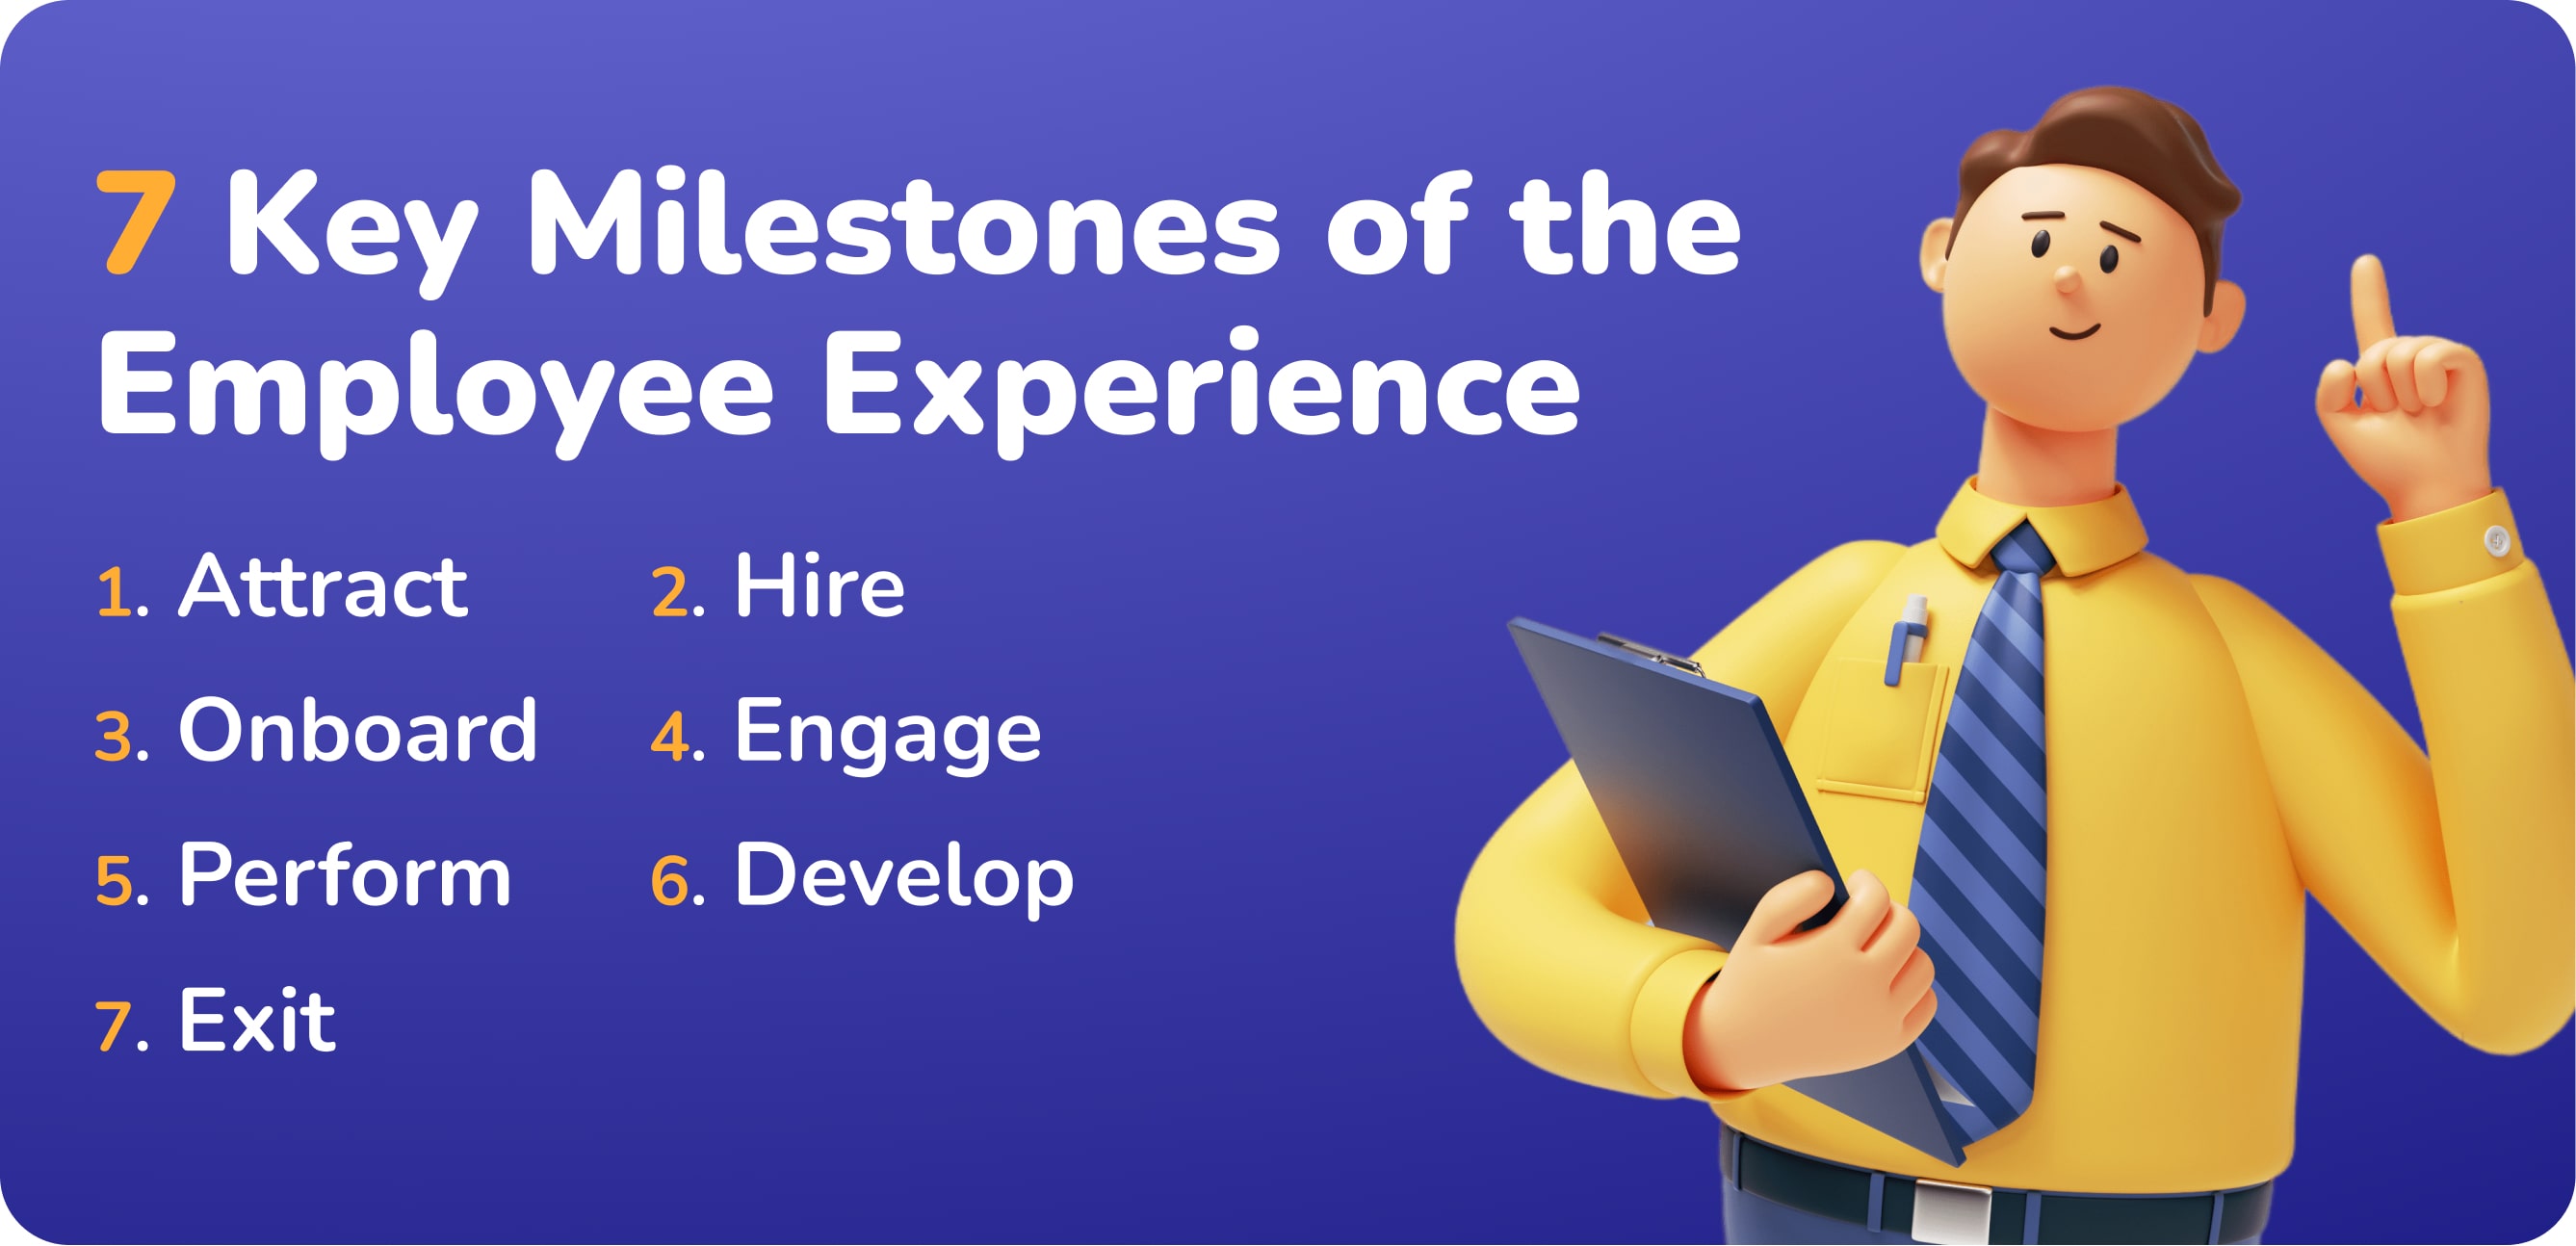 7 Key Milestones of the Employee Experience